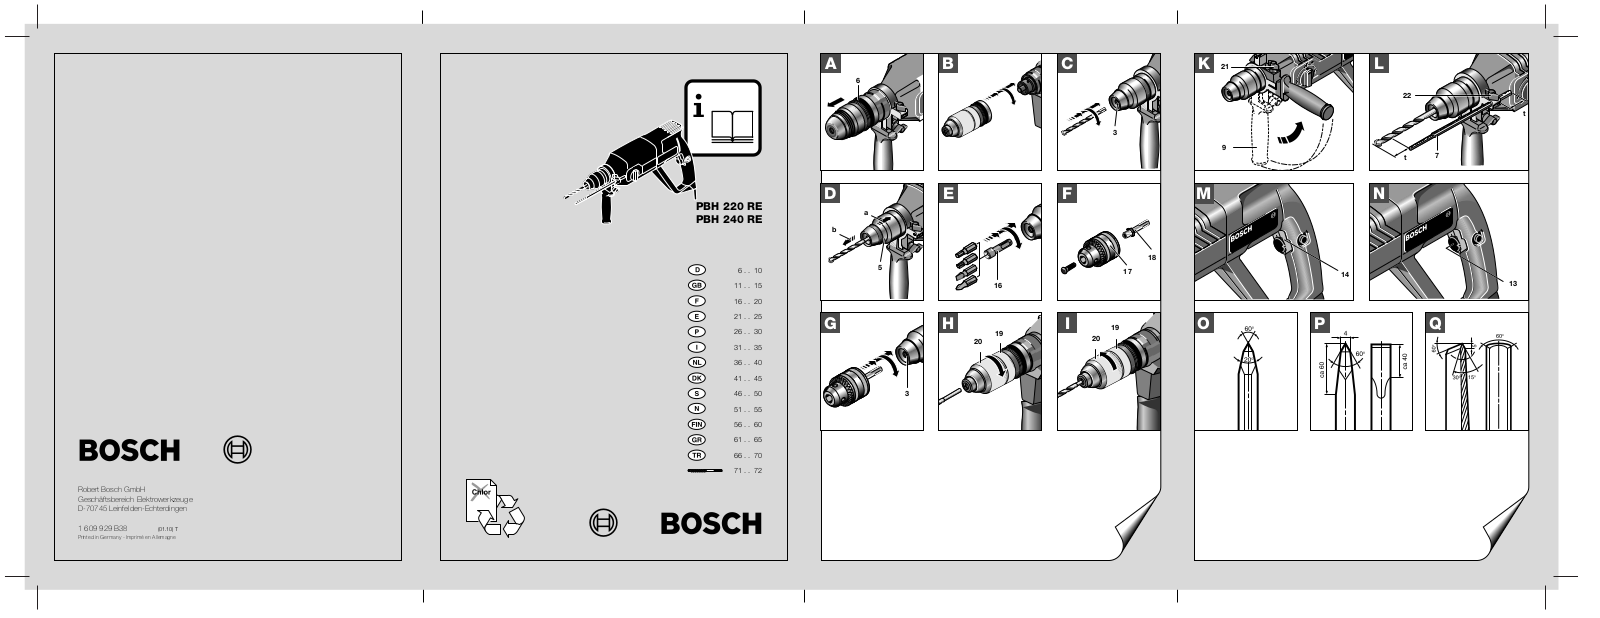 Bosch PBH220RE, PBH240RE User Manual